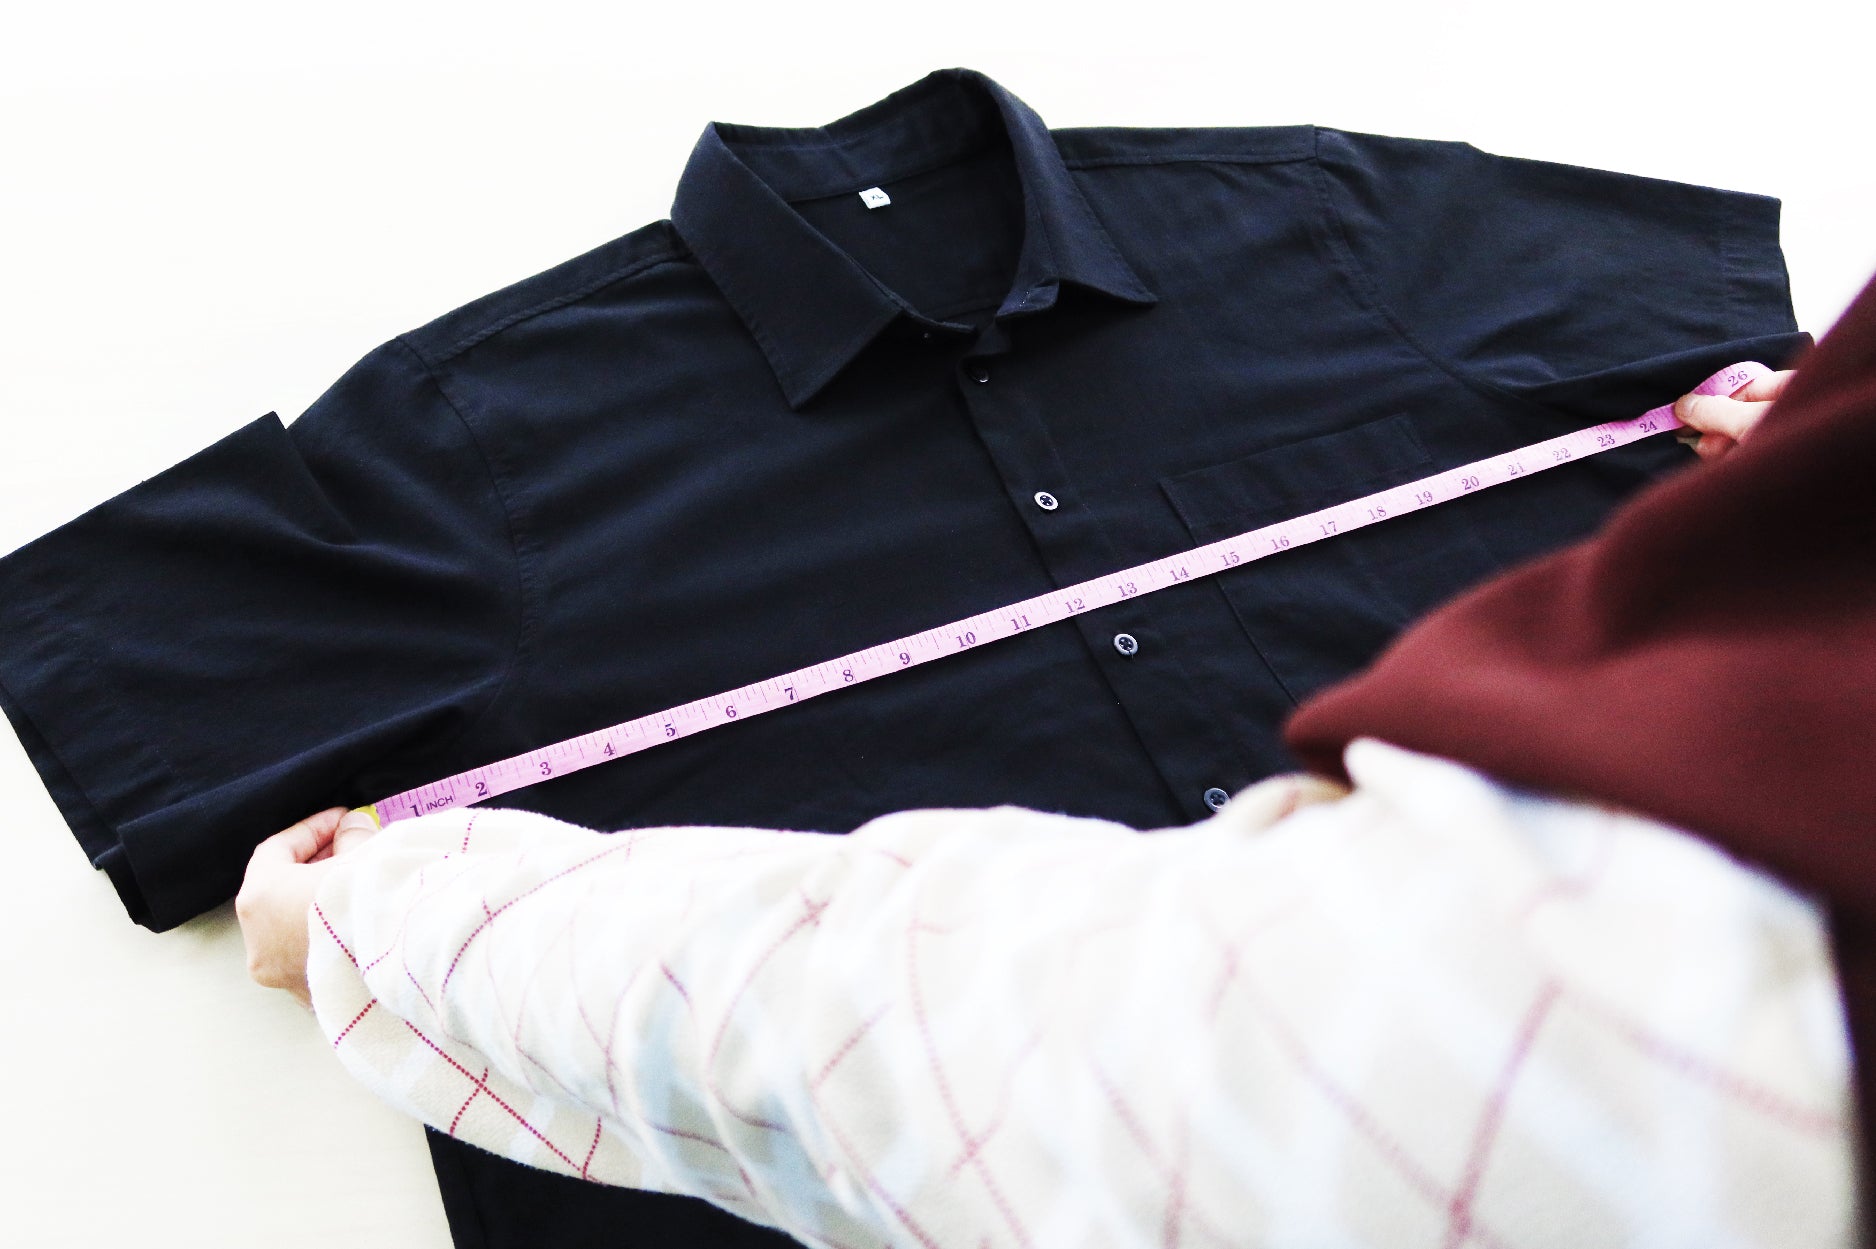 Perfect Fit Guaranteed - Introducing Bob Rock Clothing Custom Sizing Chart!